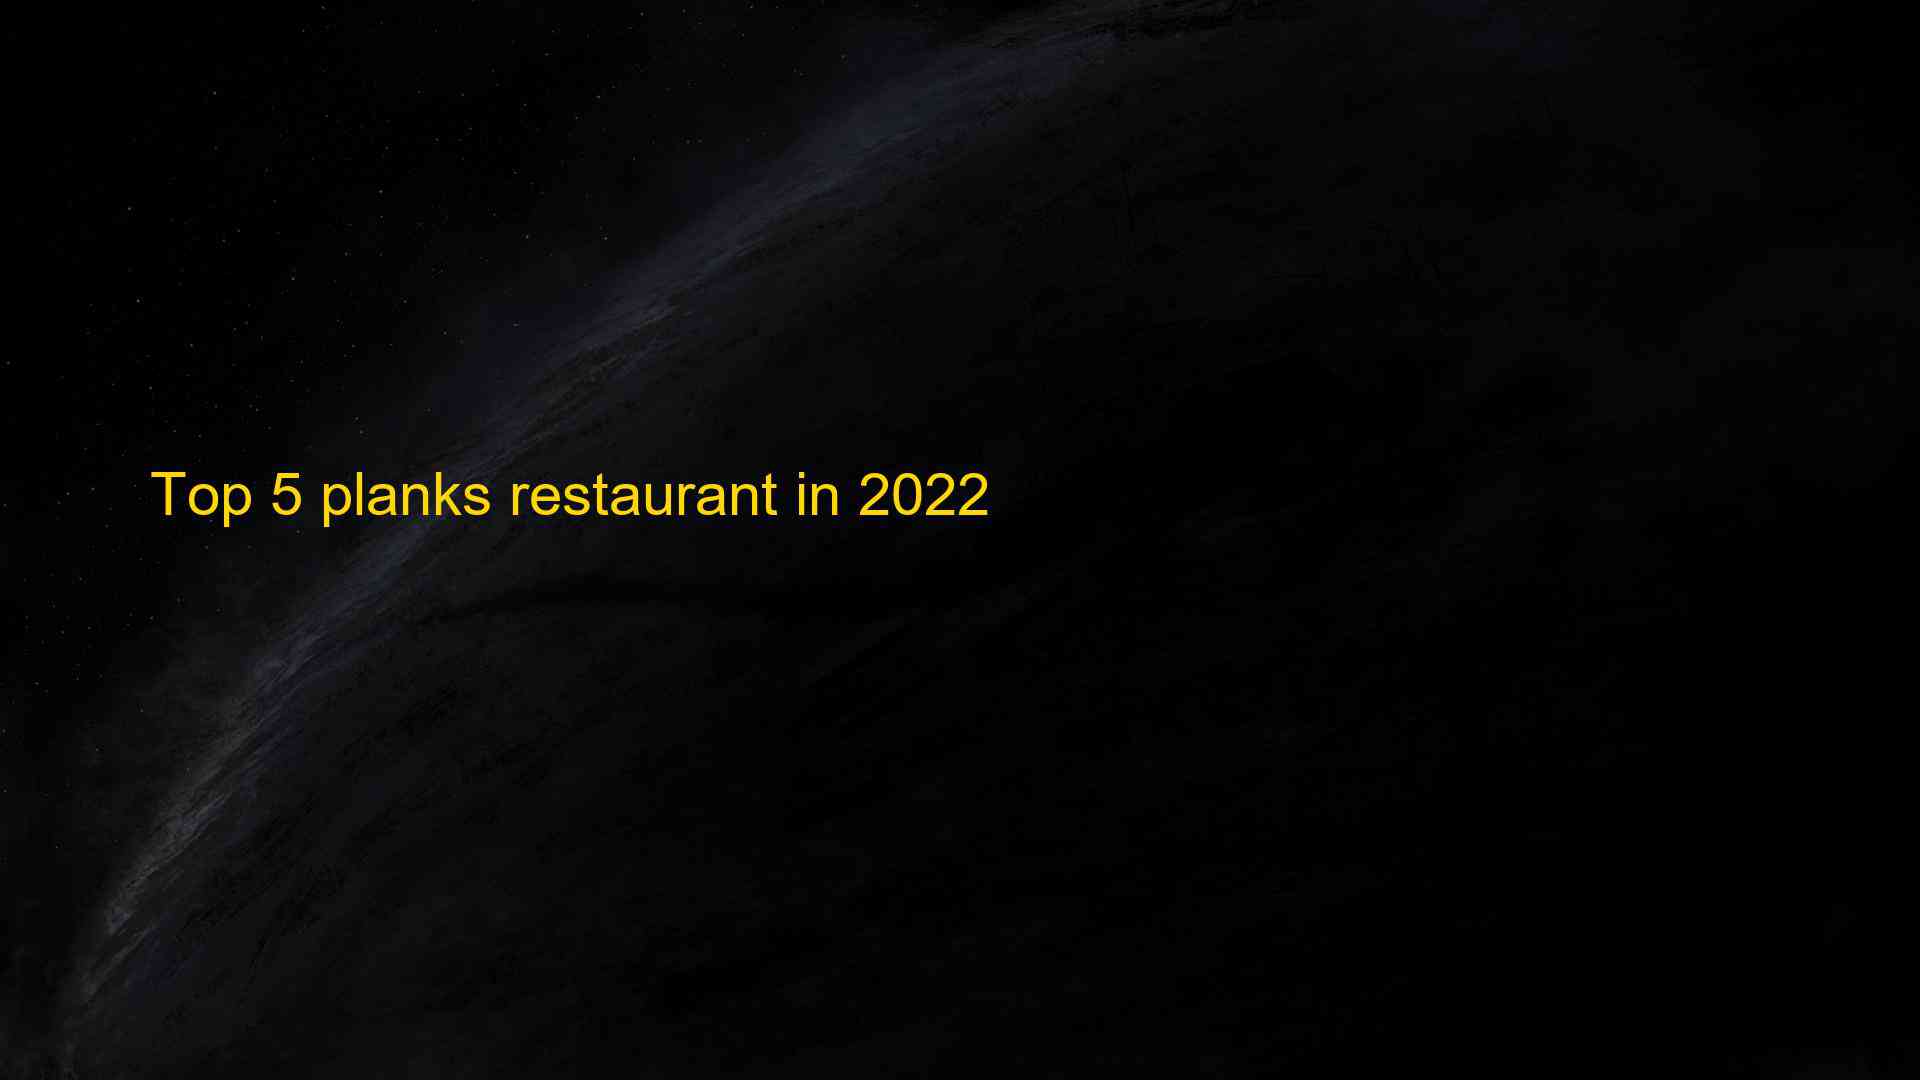 Top 5 planks restaurant in 2022 1663392304